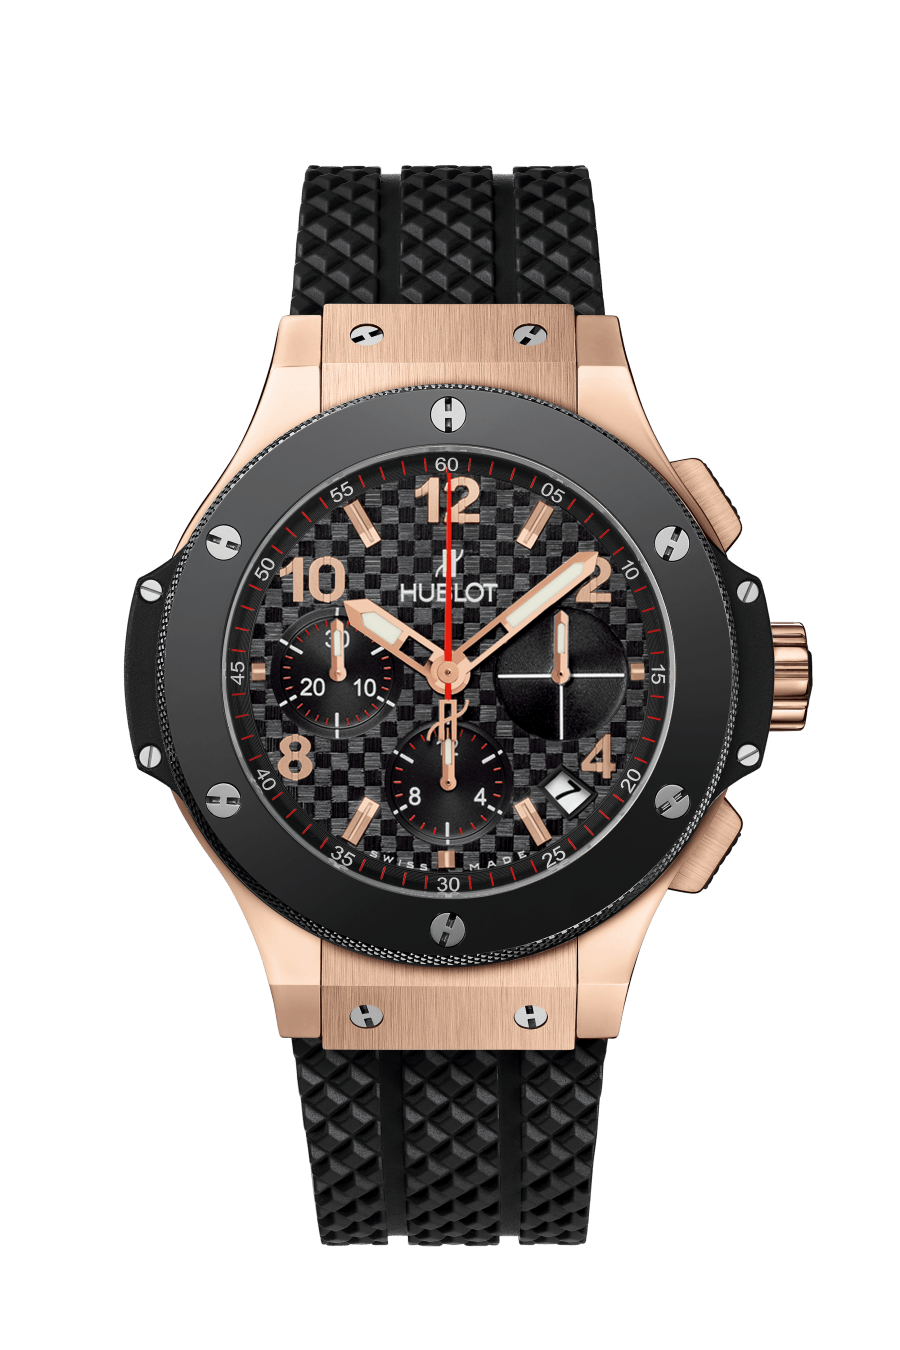 Men's watch / unisex  HUBLOT, Big Bang Gold Ceramic / 41mm, SKU: 341.PB.131.RX | watchapproach.com